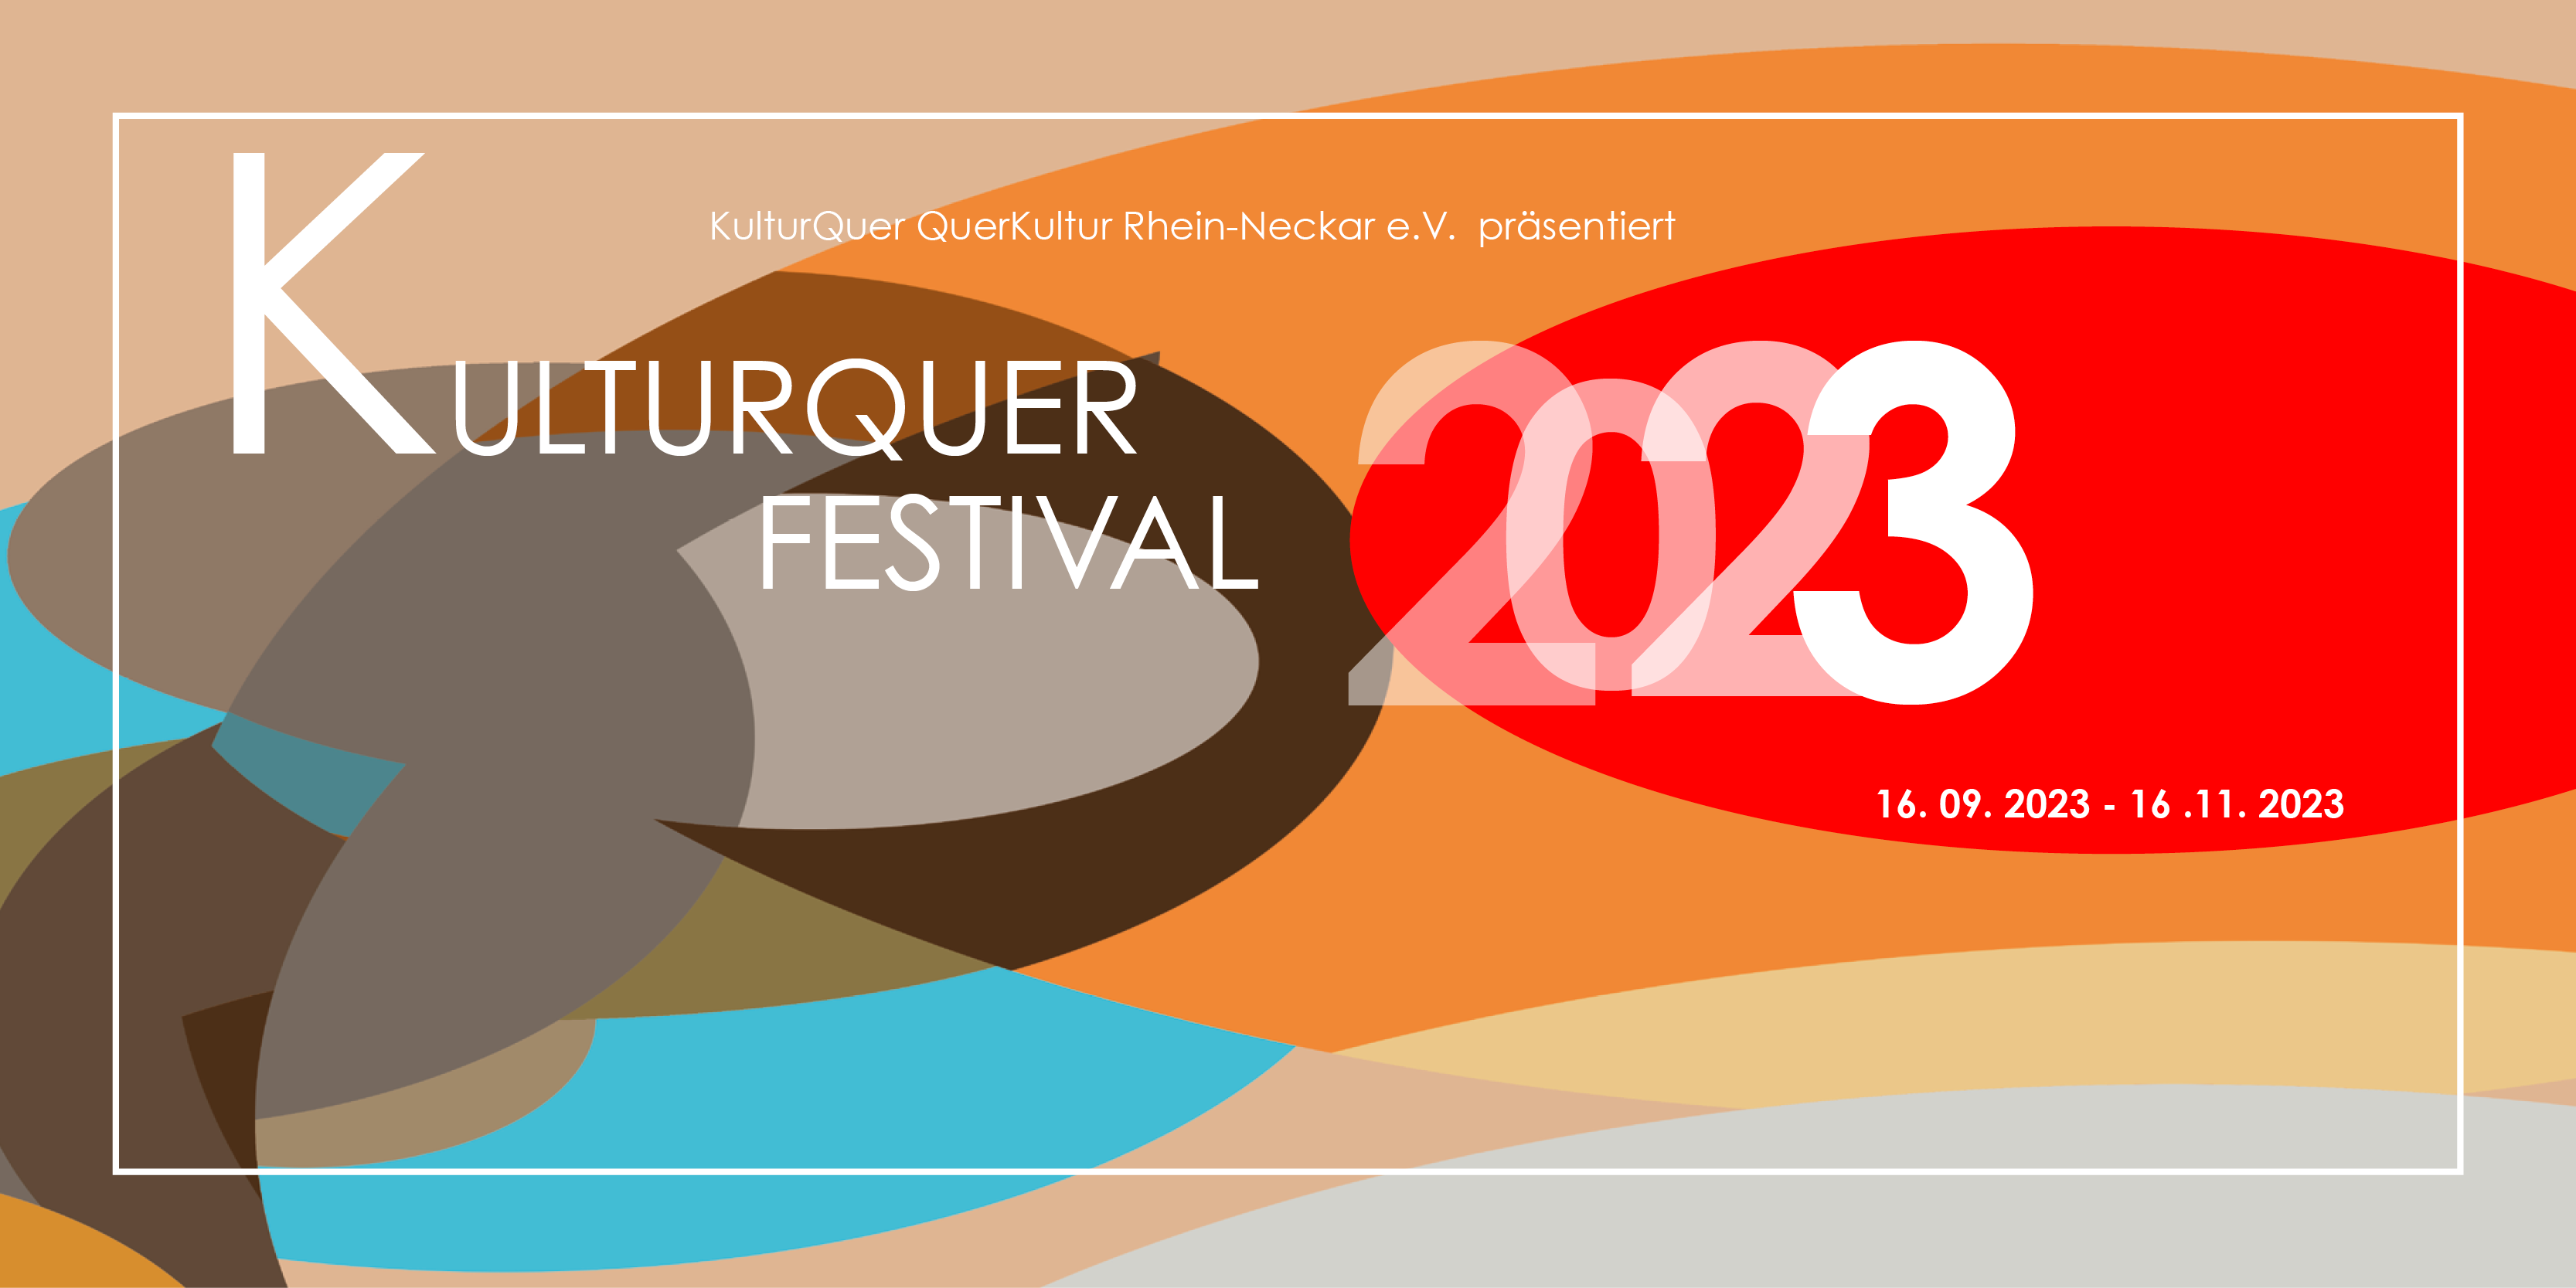 Kulturquer Festival,2023